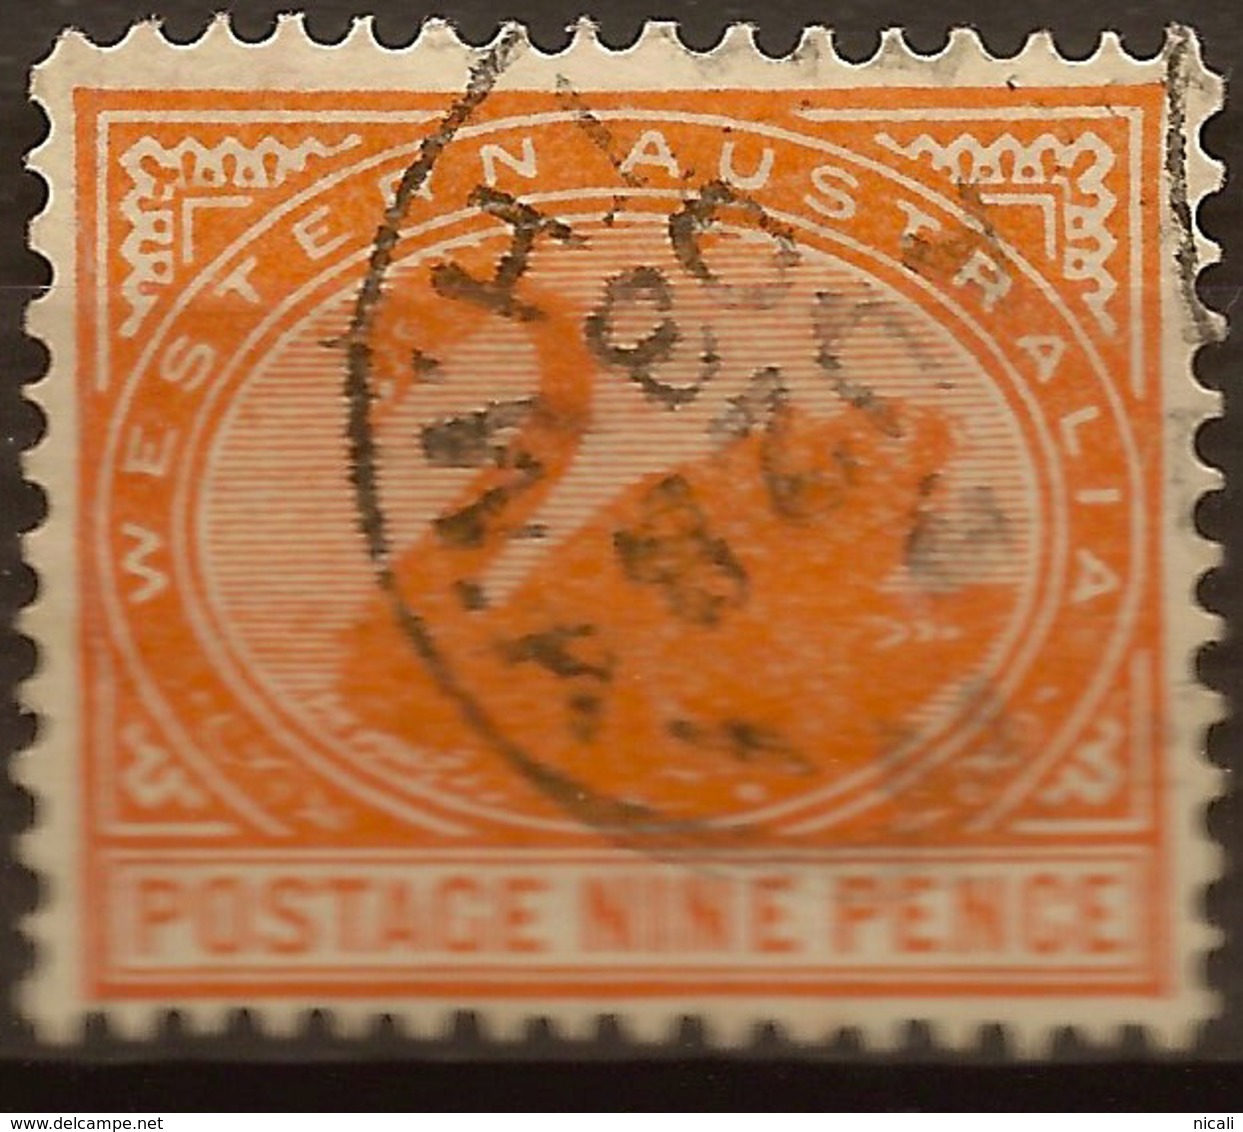 WESTERN AUSTRALIA 1902 9d Yellow-orange SG 122 U #APO25 - Oblitérés